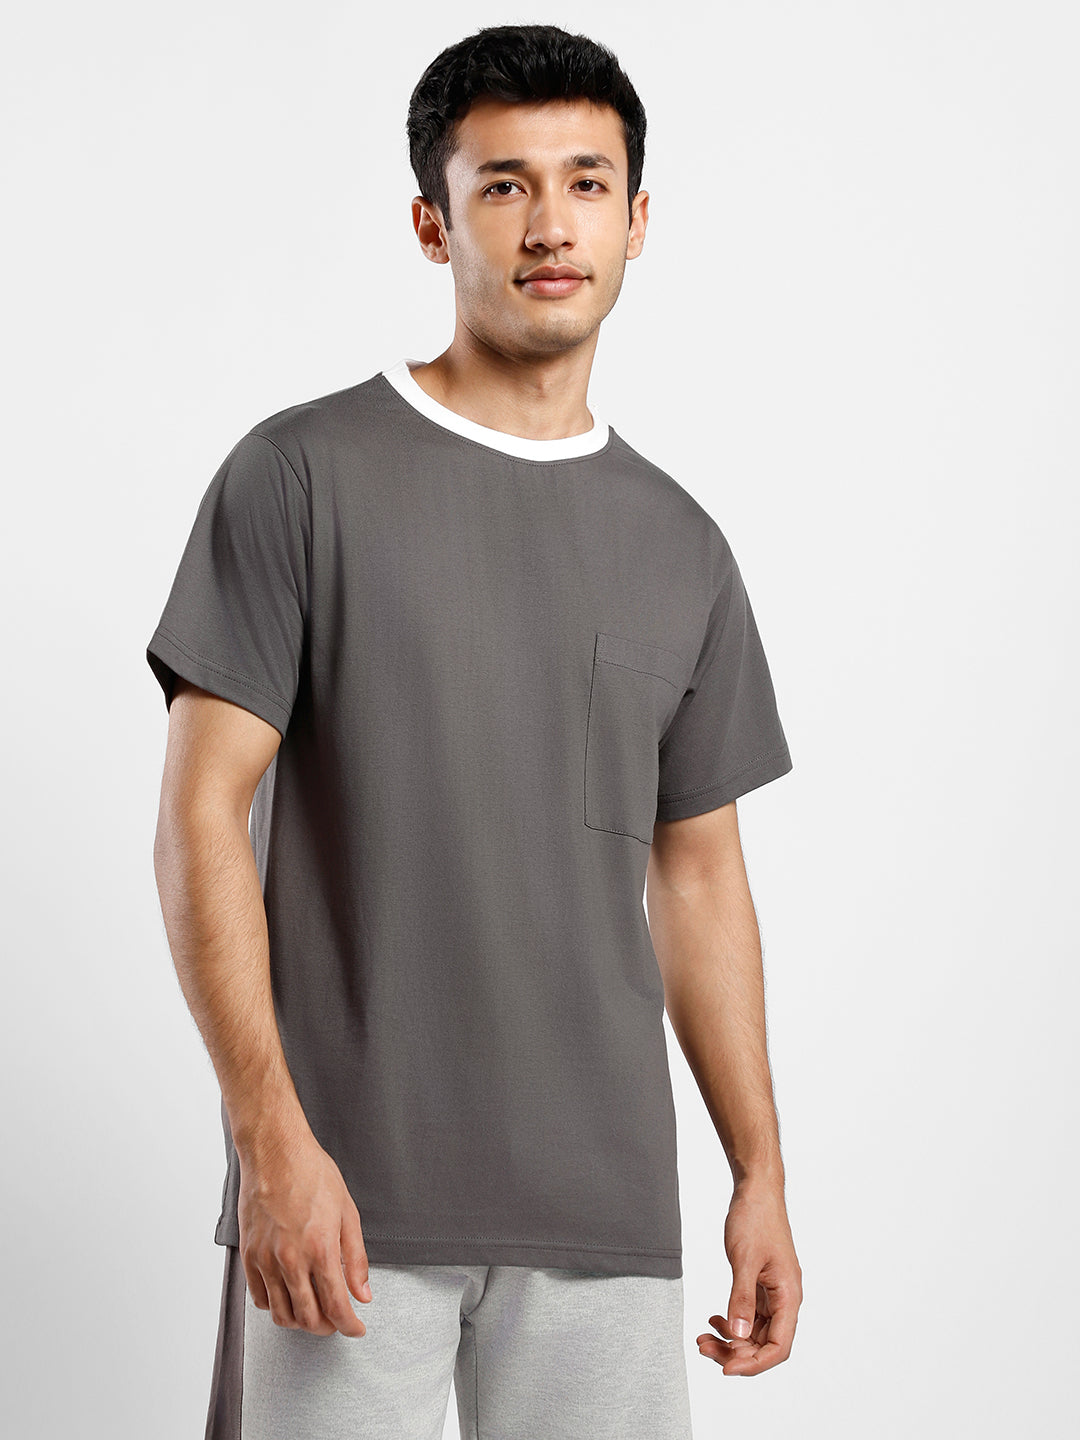 Weston Oversized Contrast Trim T-Shirt